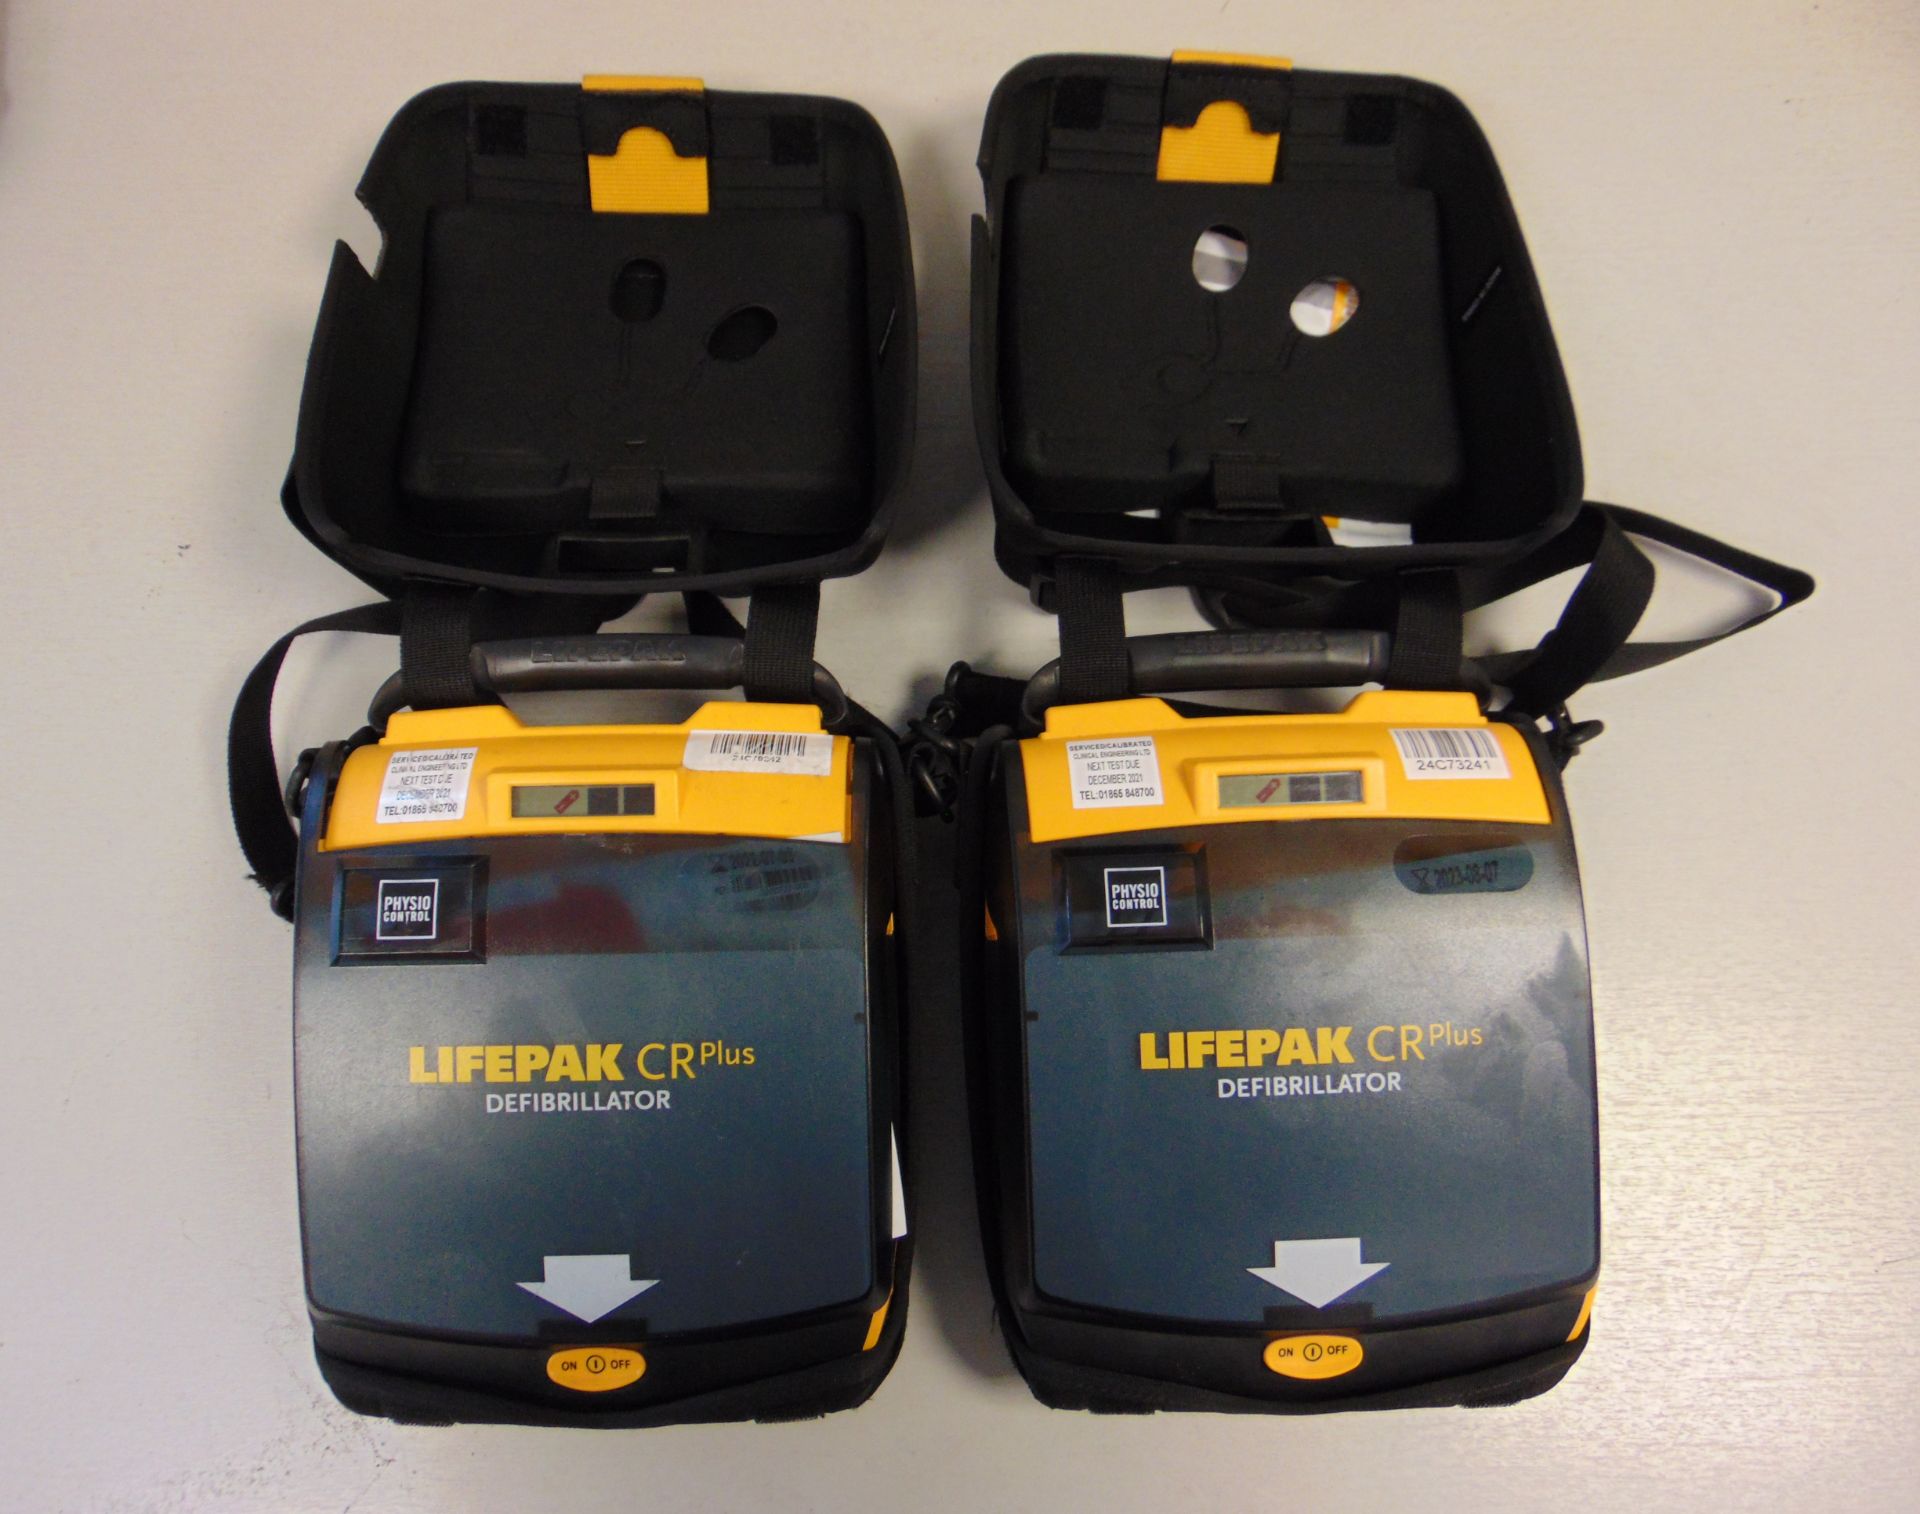 2 x Physio-Control Lifepak CR Plus Defibrillator Units - Fully Automatic - Image 3 of 3